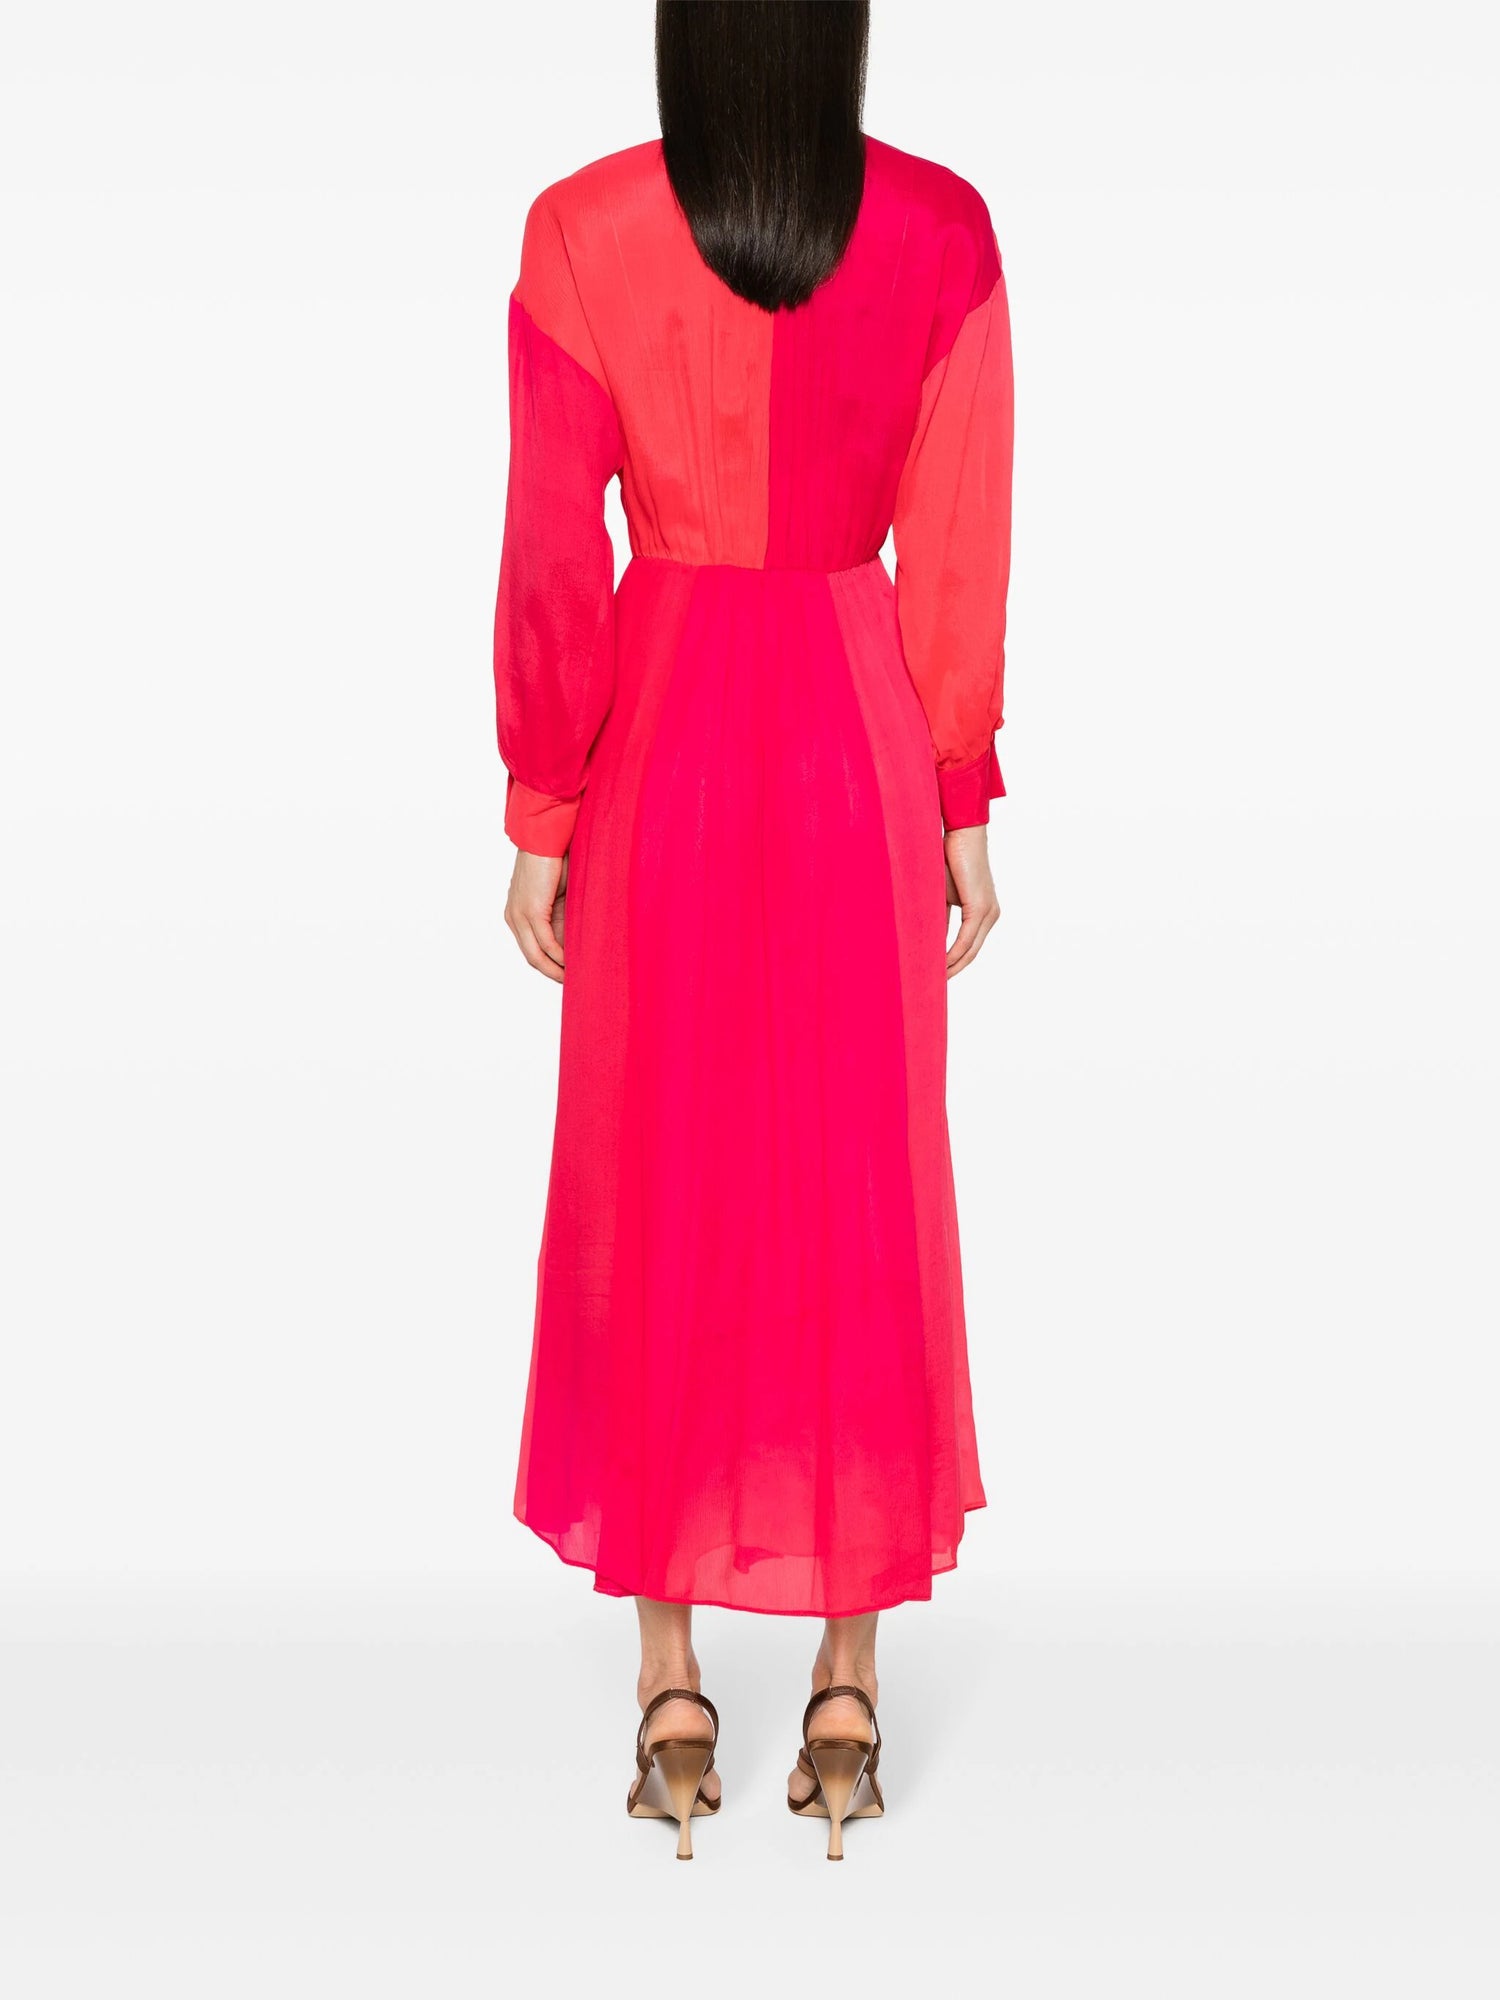 Crepon silk long shaded dress, watermelon